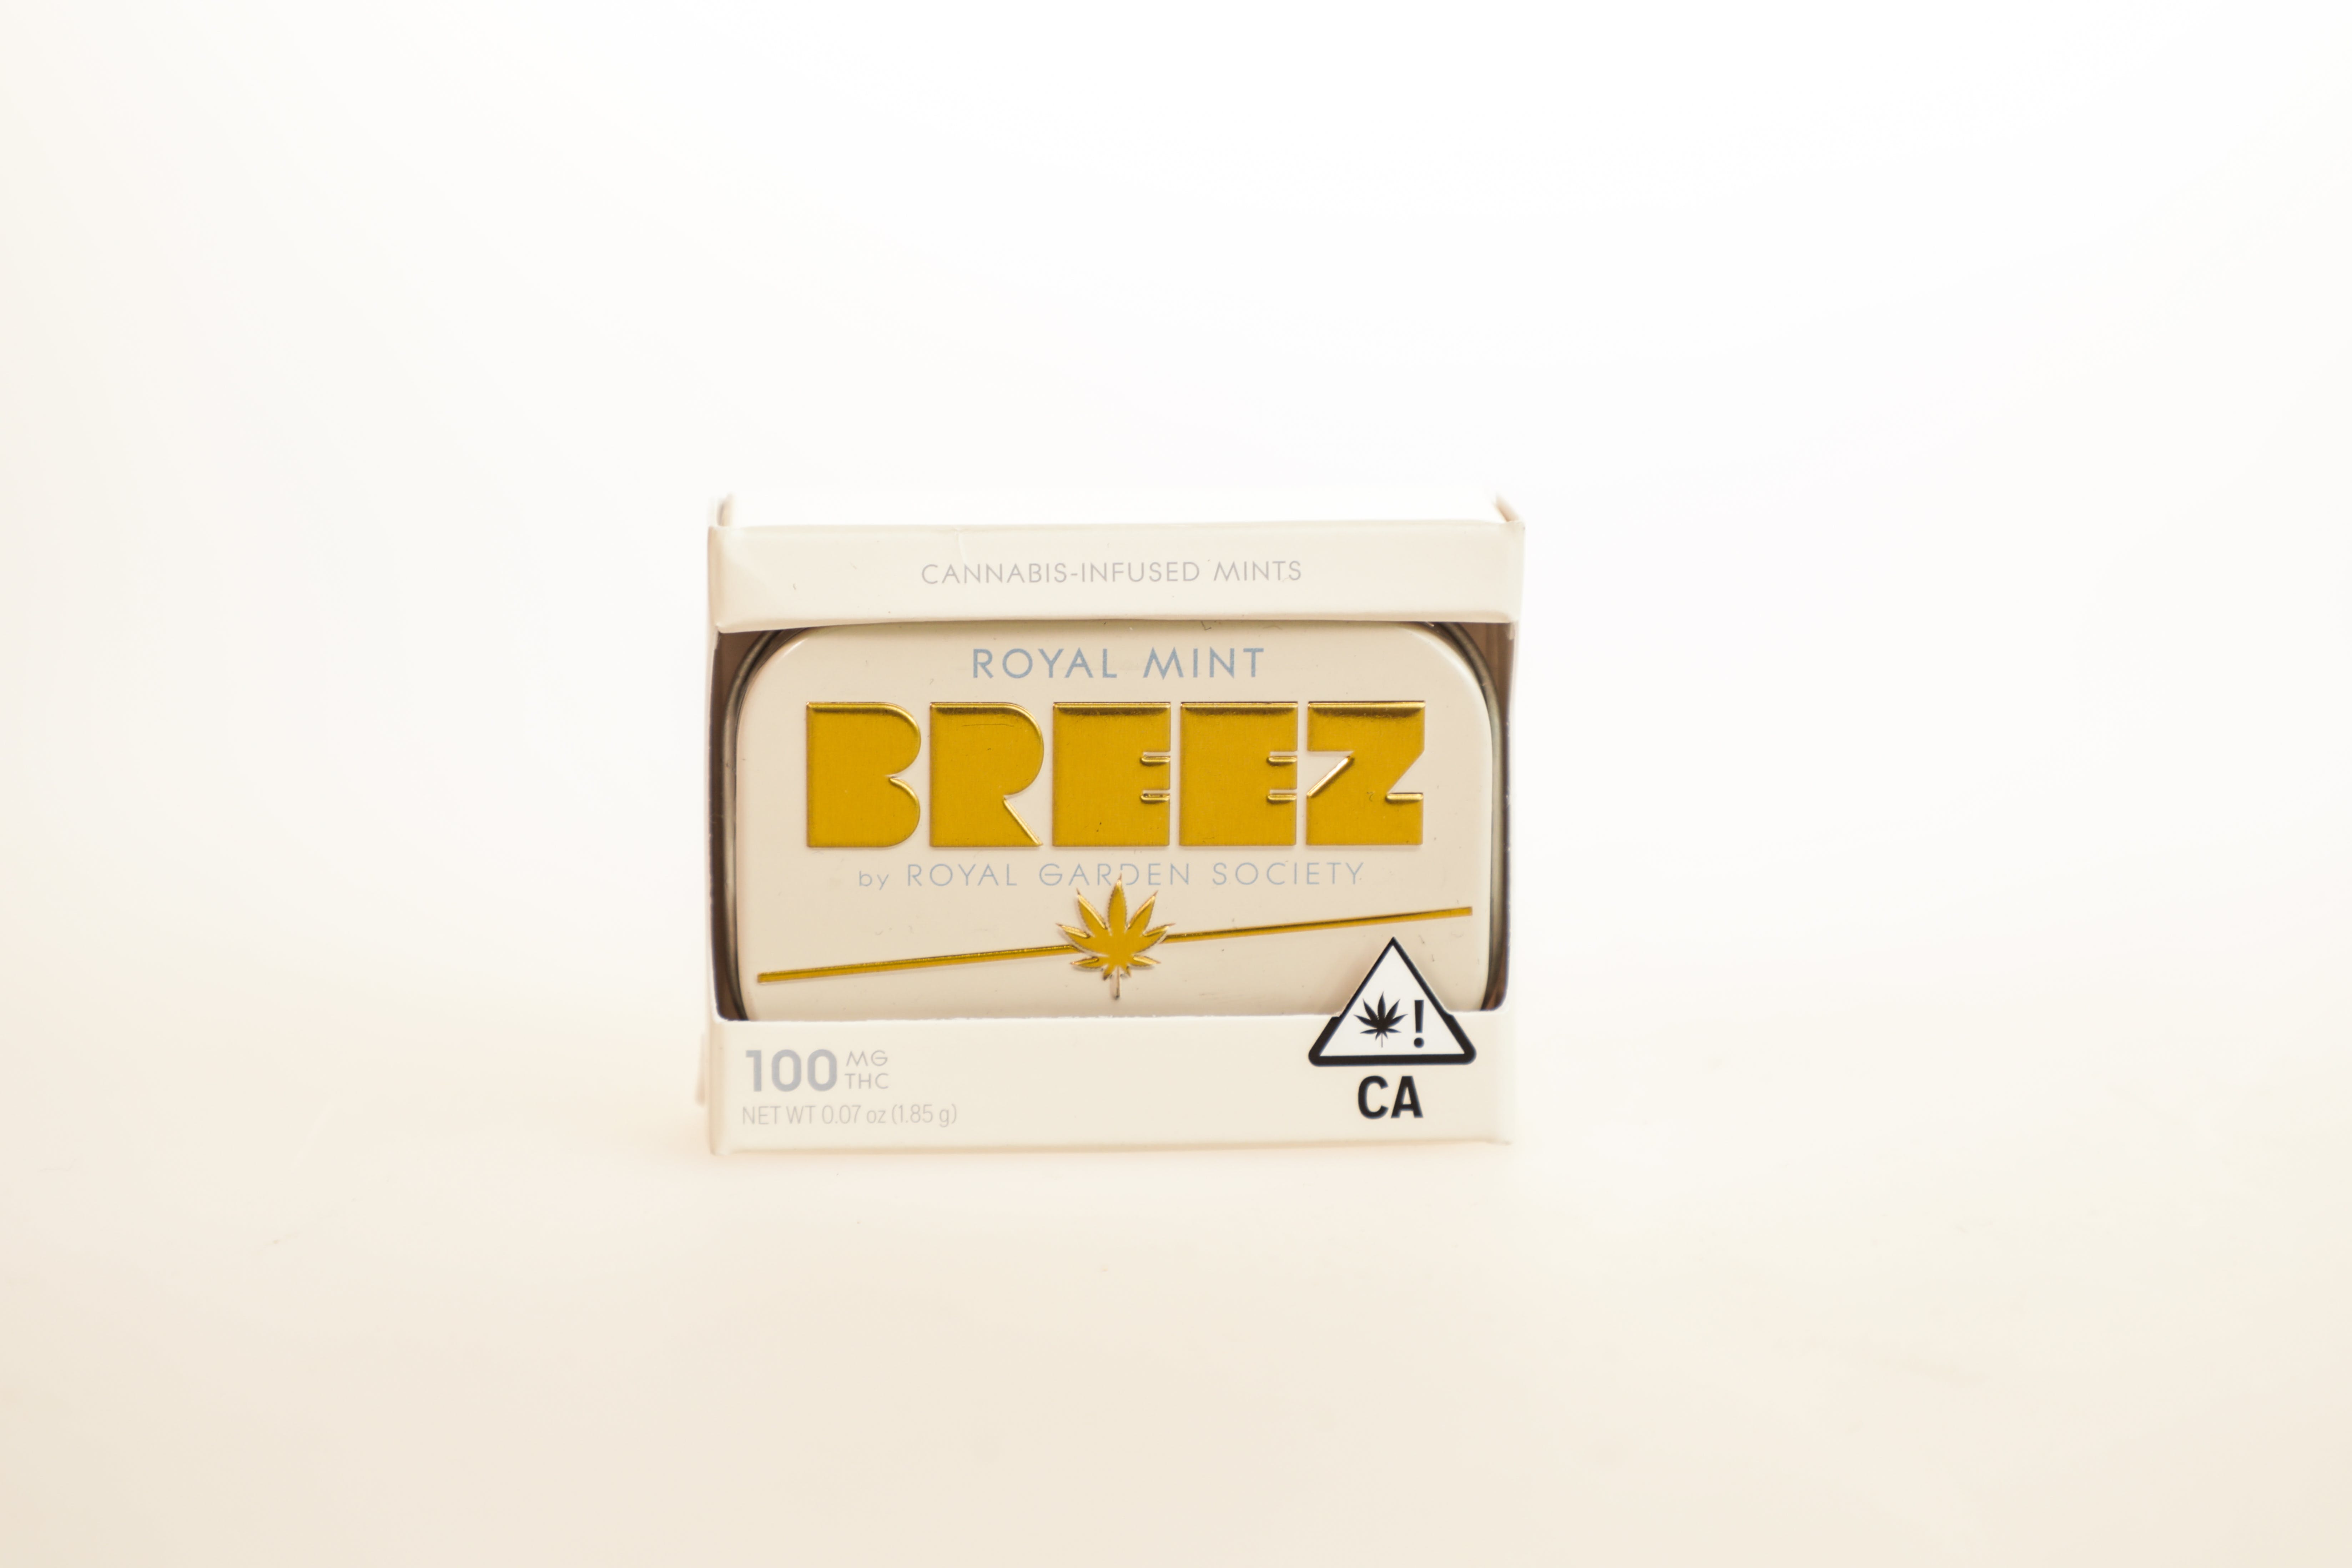 Breez - Royal Mint Tins